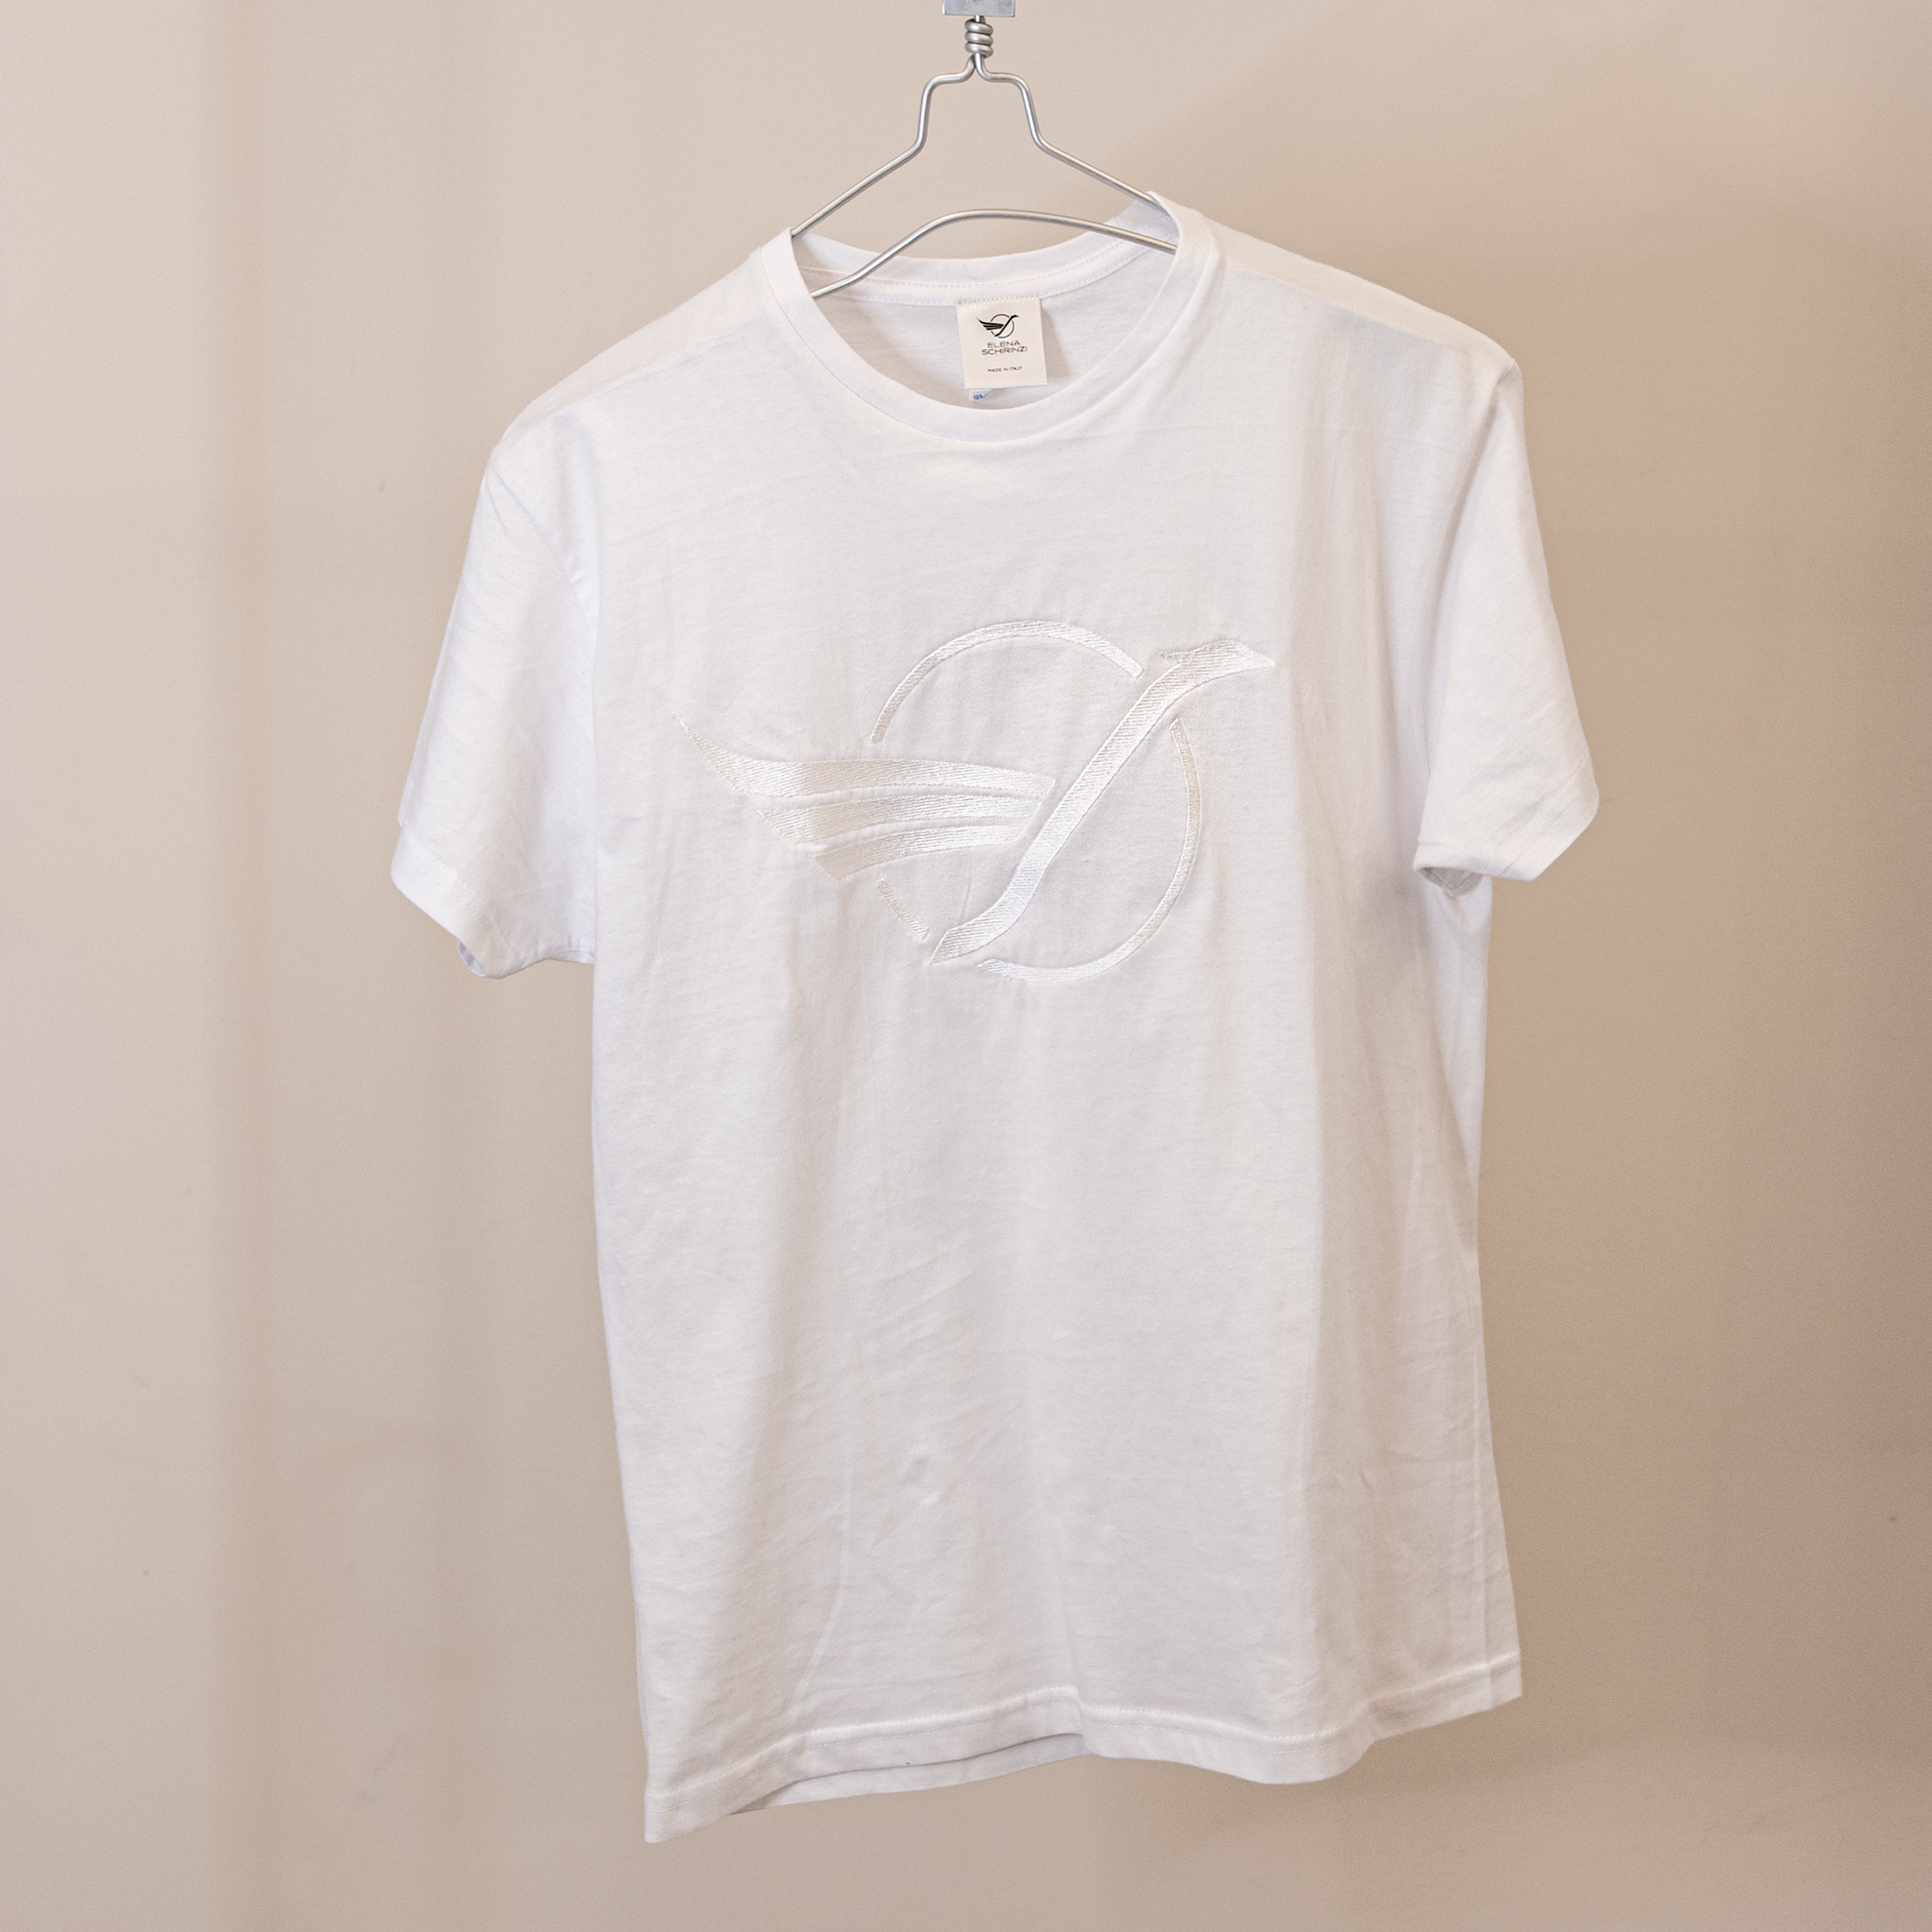 ES Collection Brand Elena Schirinzi Italy T-Shirt Phoenix White